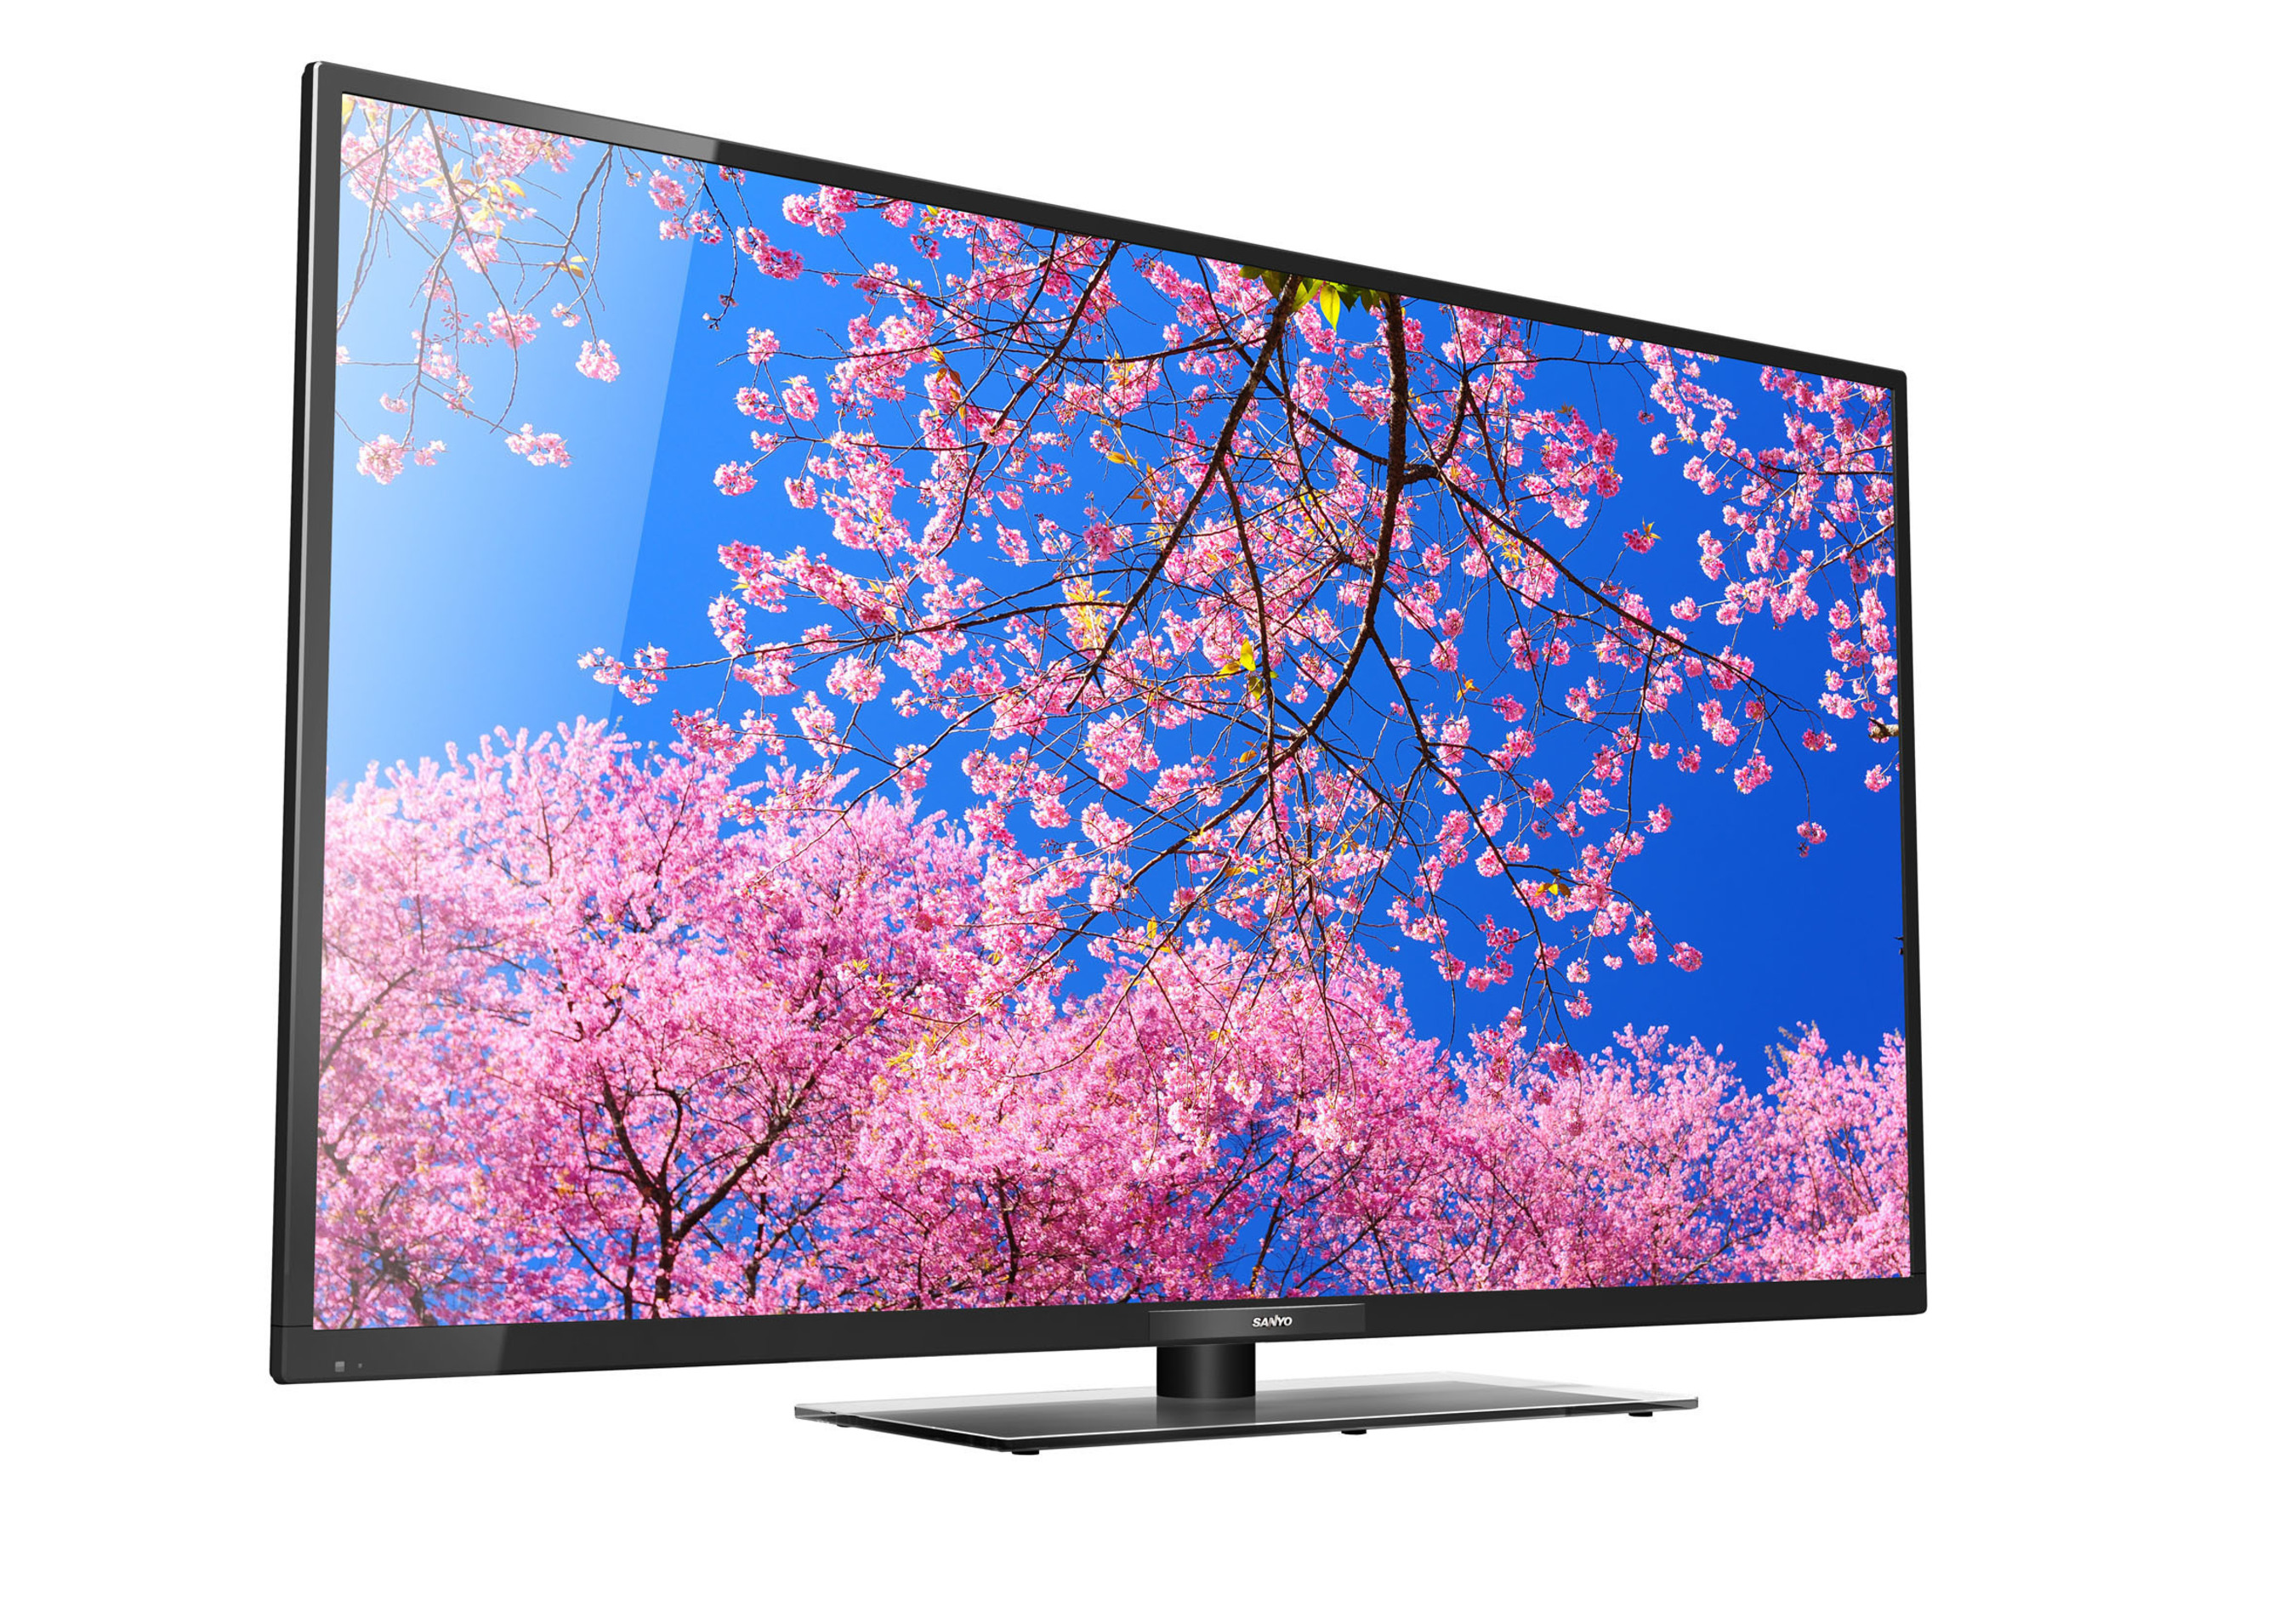 SANYO Introduces its 2014 Full HD TV Line-up (PRNewsFoto/SANYO Manufacturing Corporation)